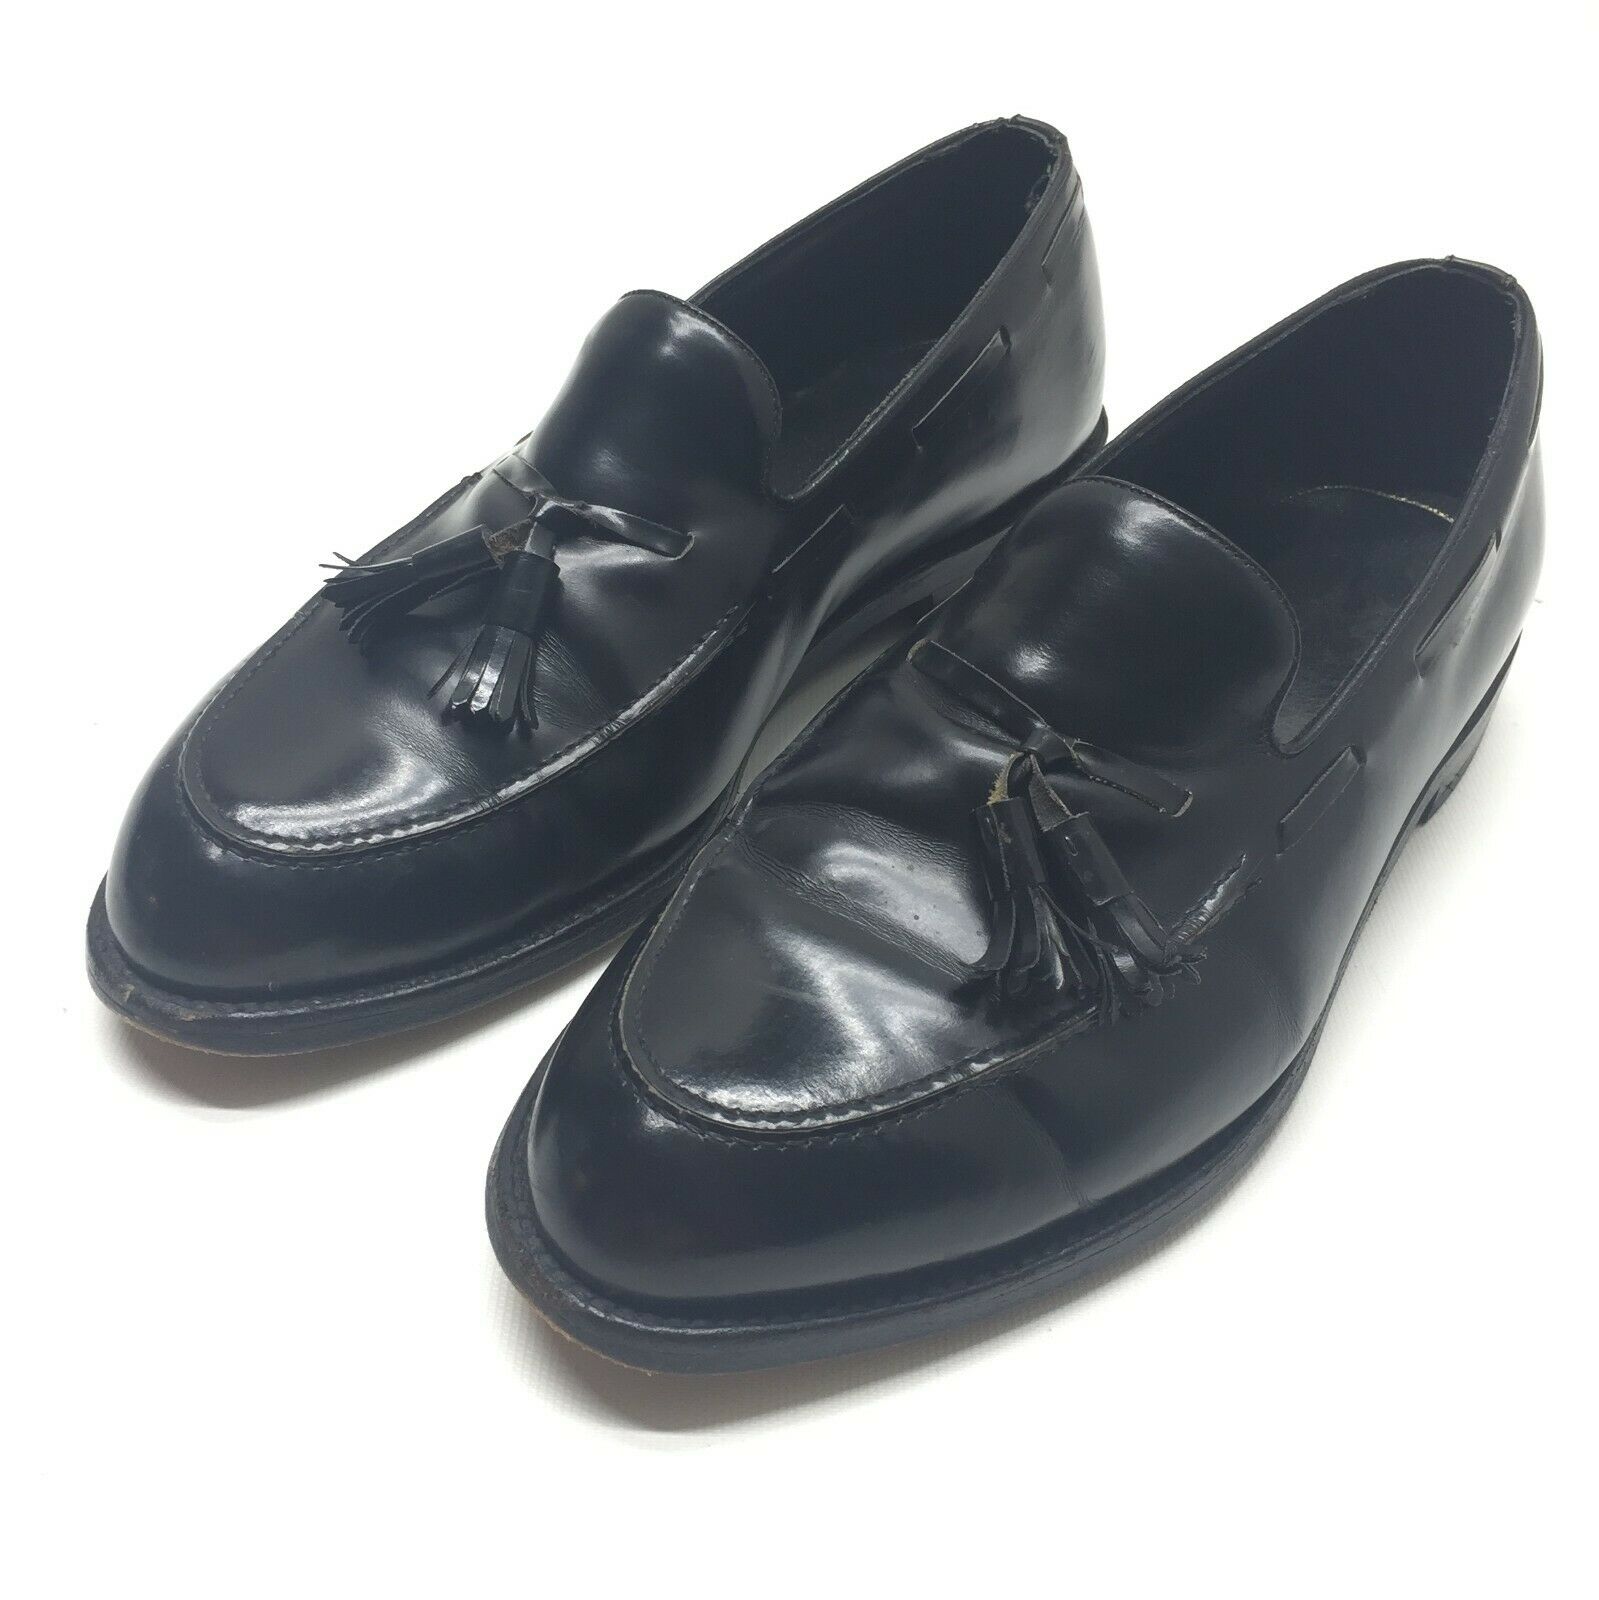 Royal imperial by Florsheim Men's 10.5 EEE Black Tassel Dress Shoes Oxfords